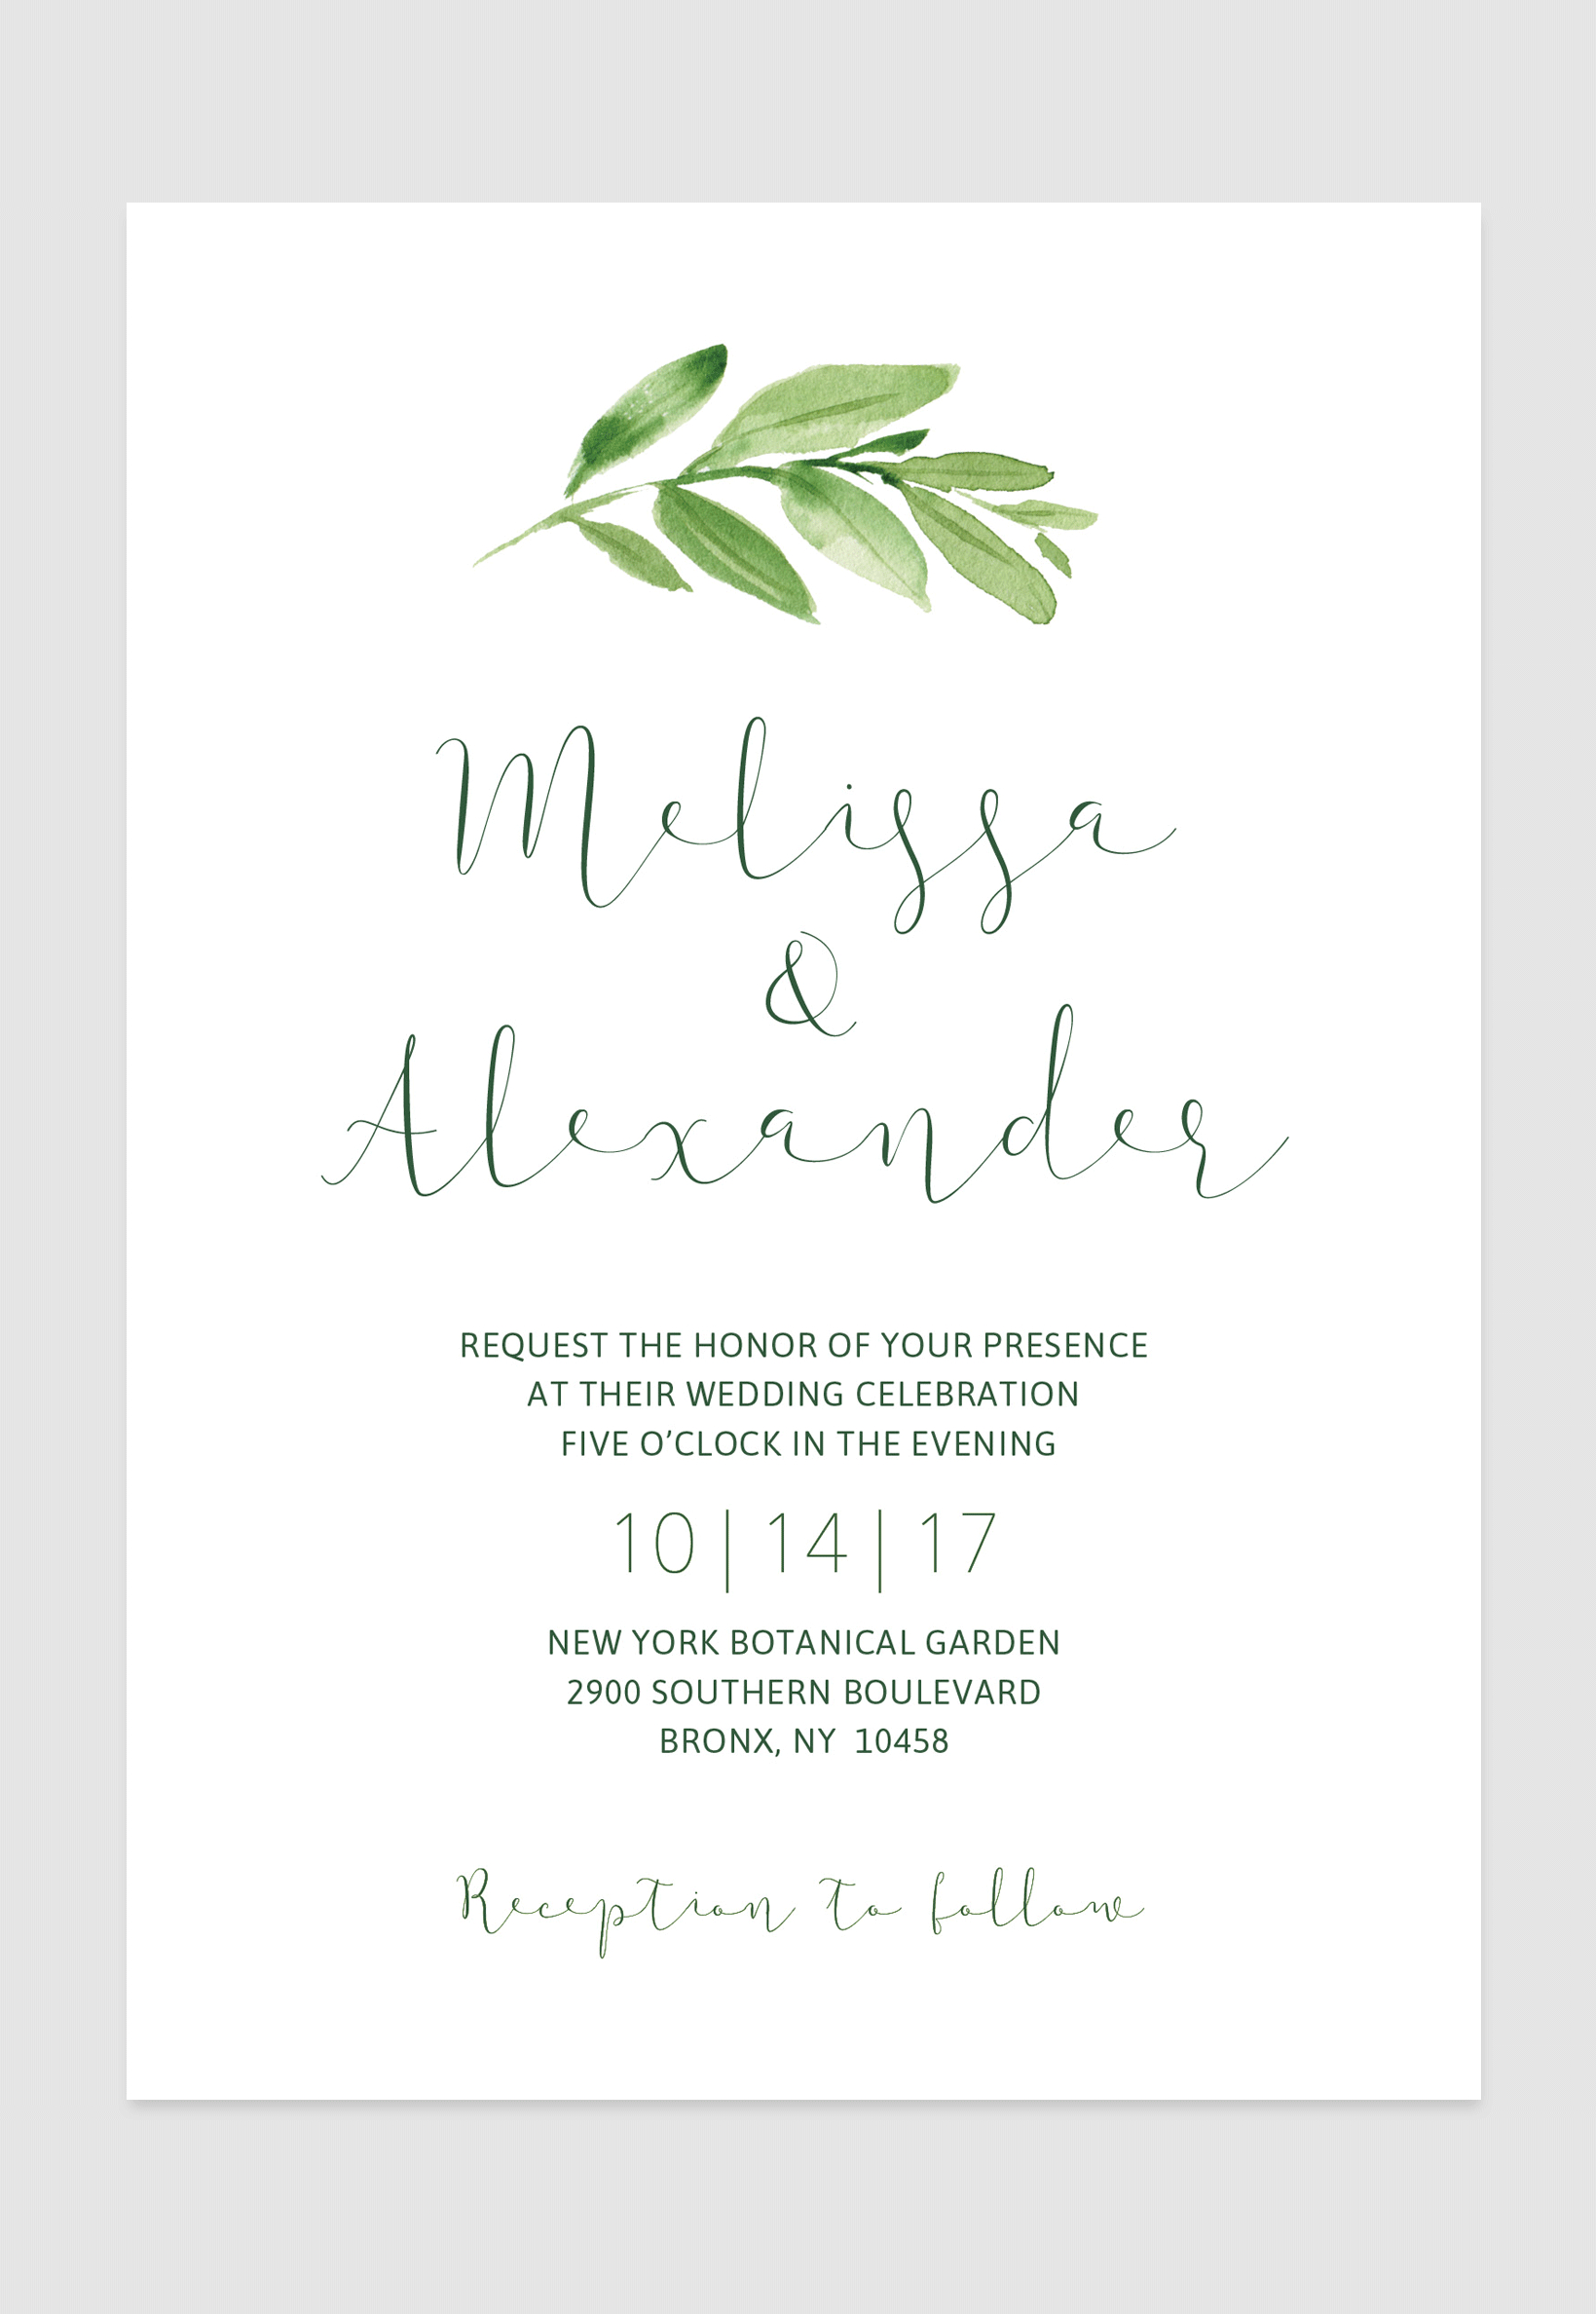 Simple Elegant Wedding Invitations Simple Elegant Greenery Invitation For Your Rustic Elegant Boho